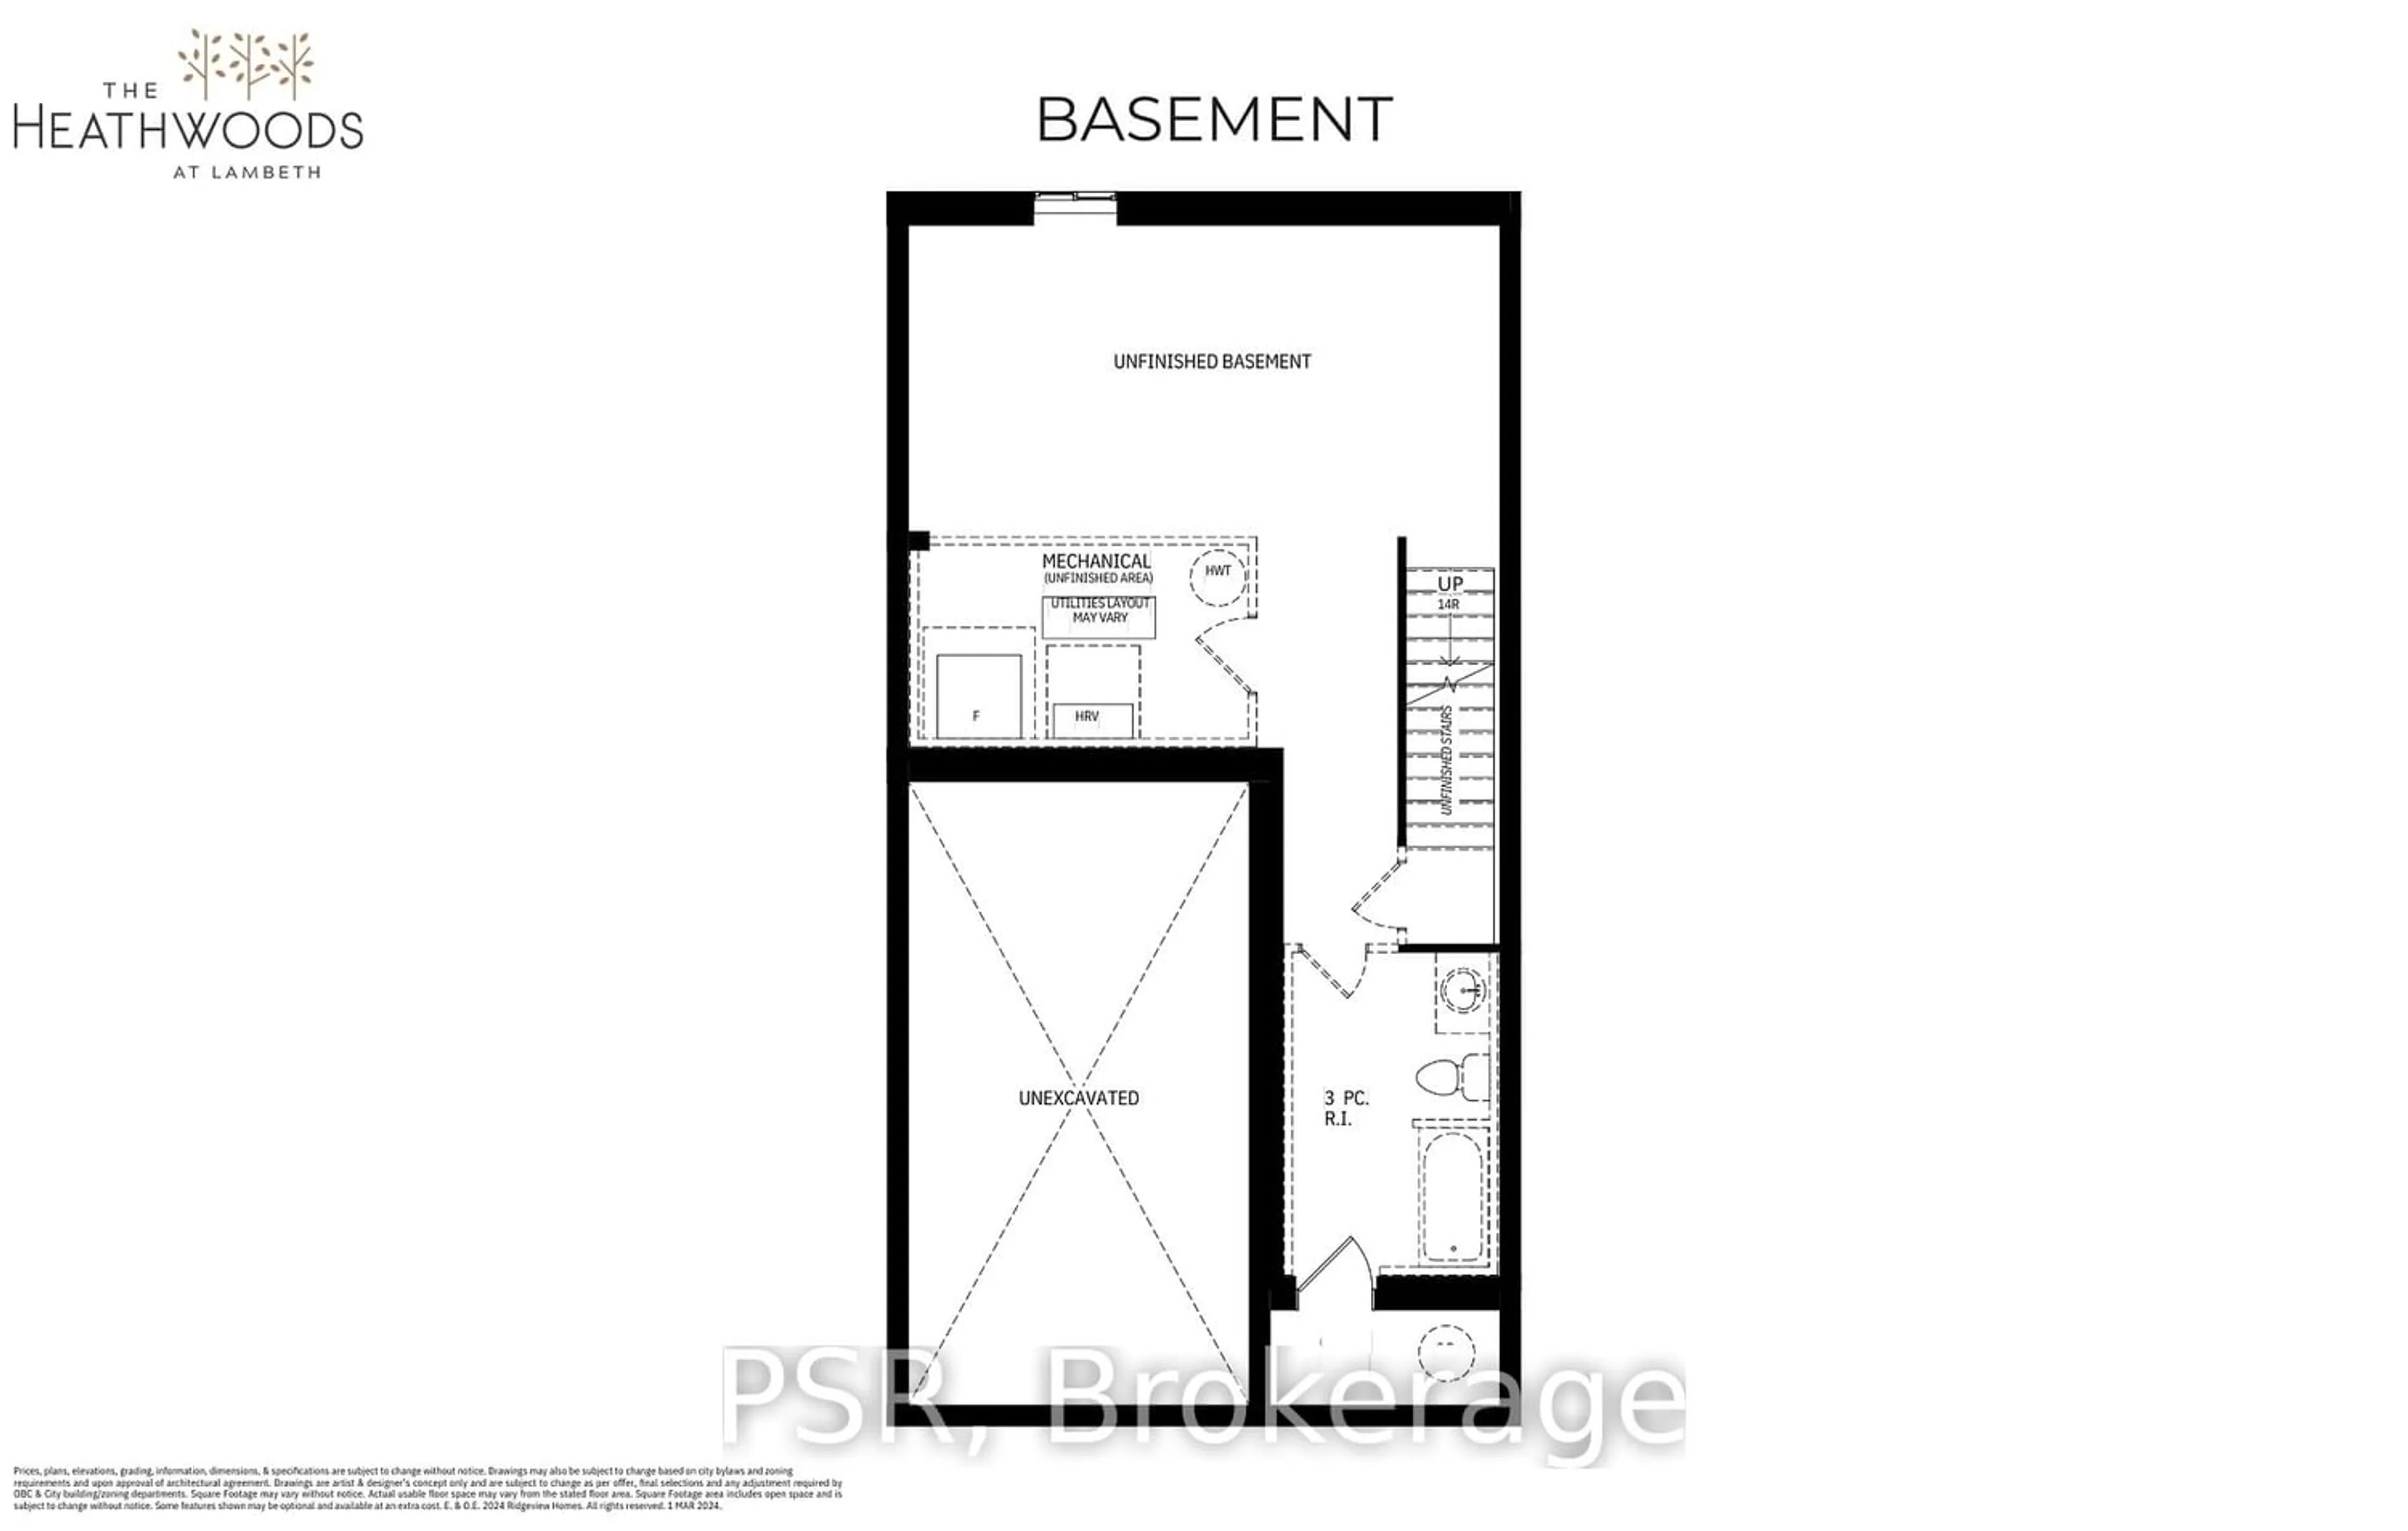 Floor plan for Lot 118 Tbd Heathwoods Ave, London Ontario N6P 1H5